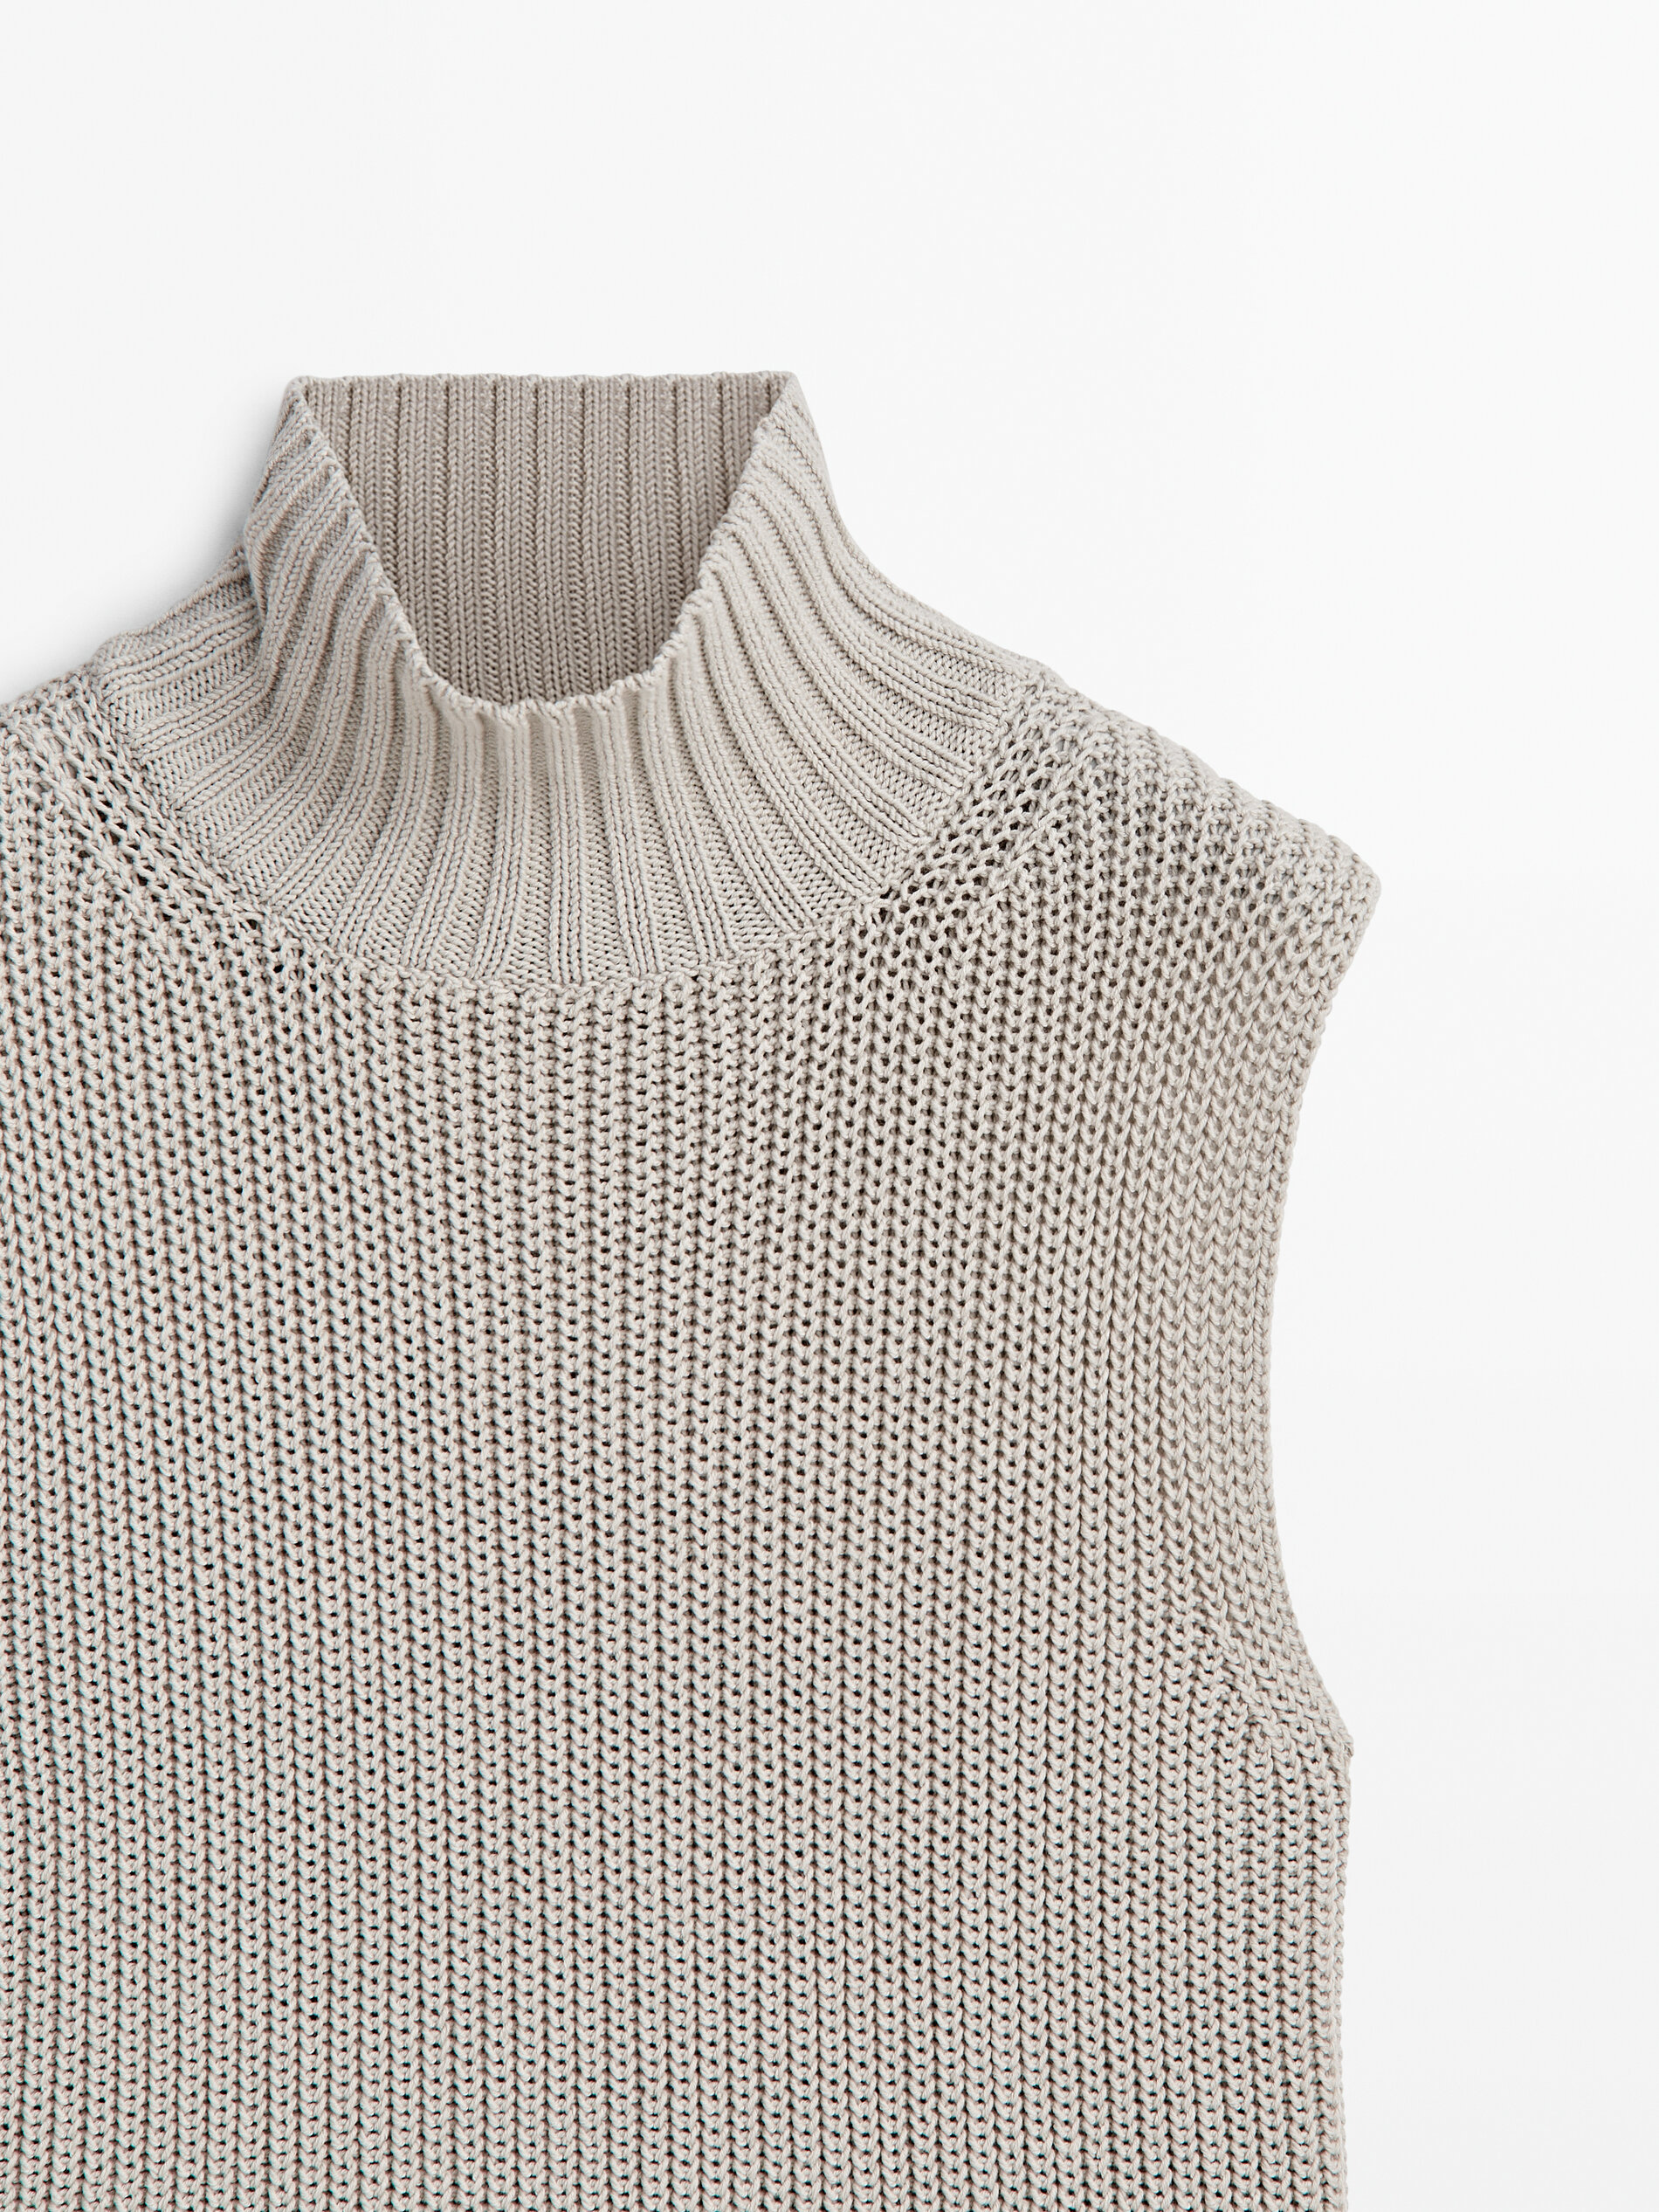 Purl knit vest with a mock turtleneck